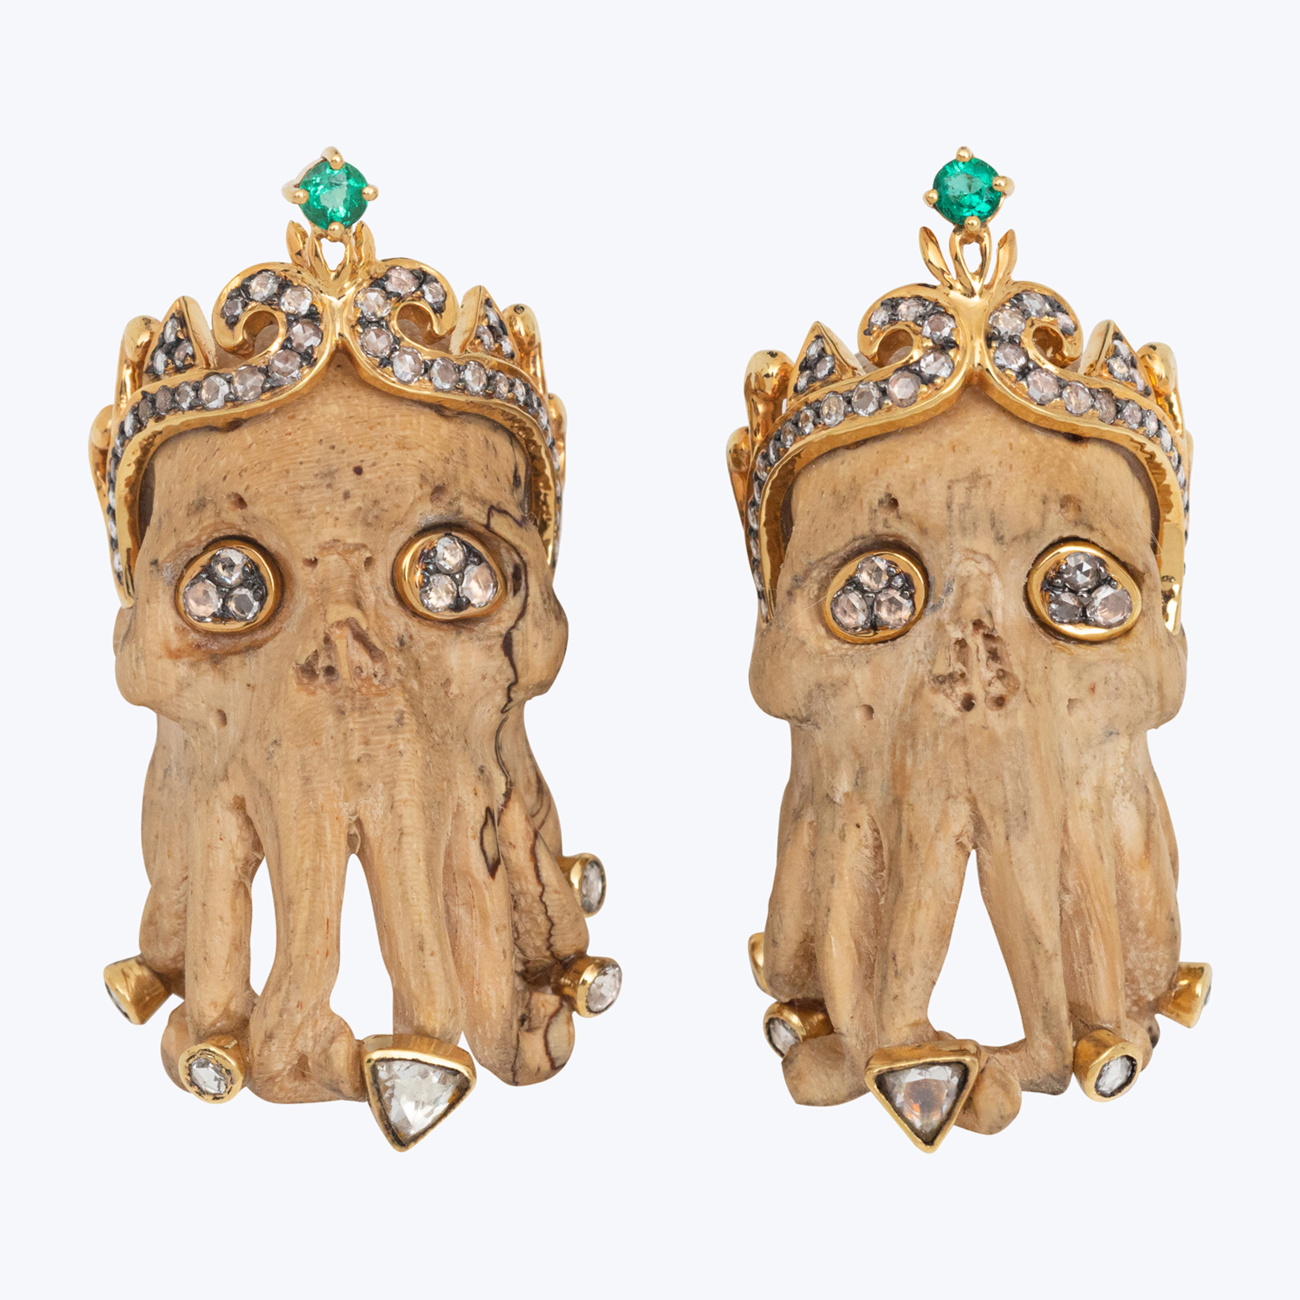 “Davy Jones” – Pirates of the Caribbean” Inspired Octopus Earrings